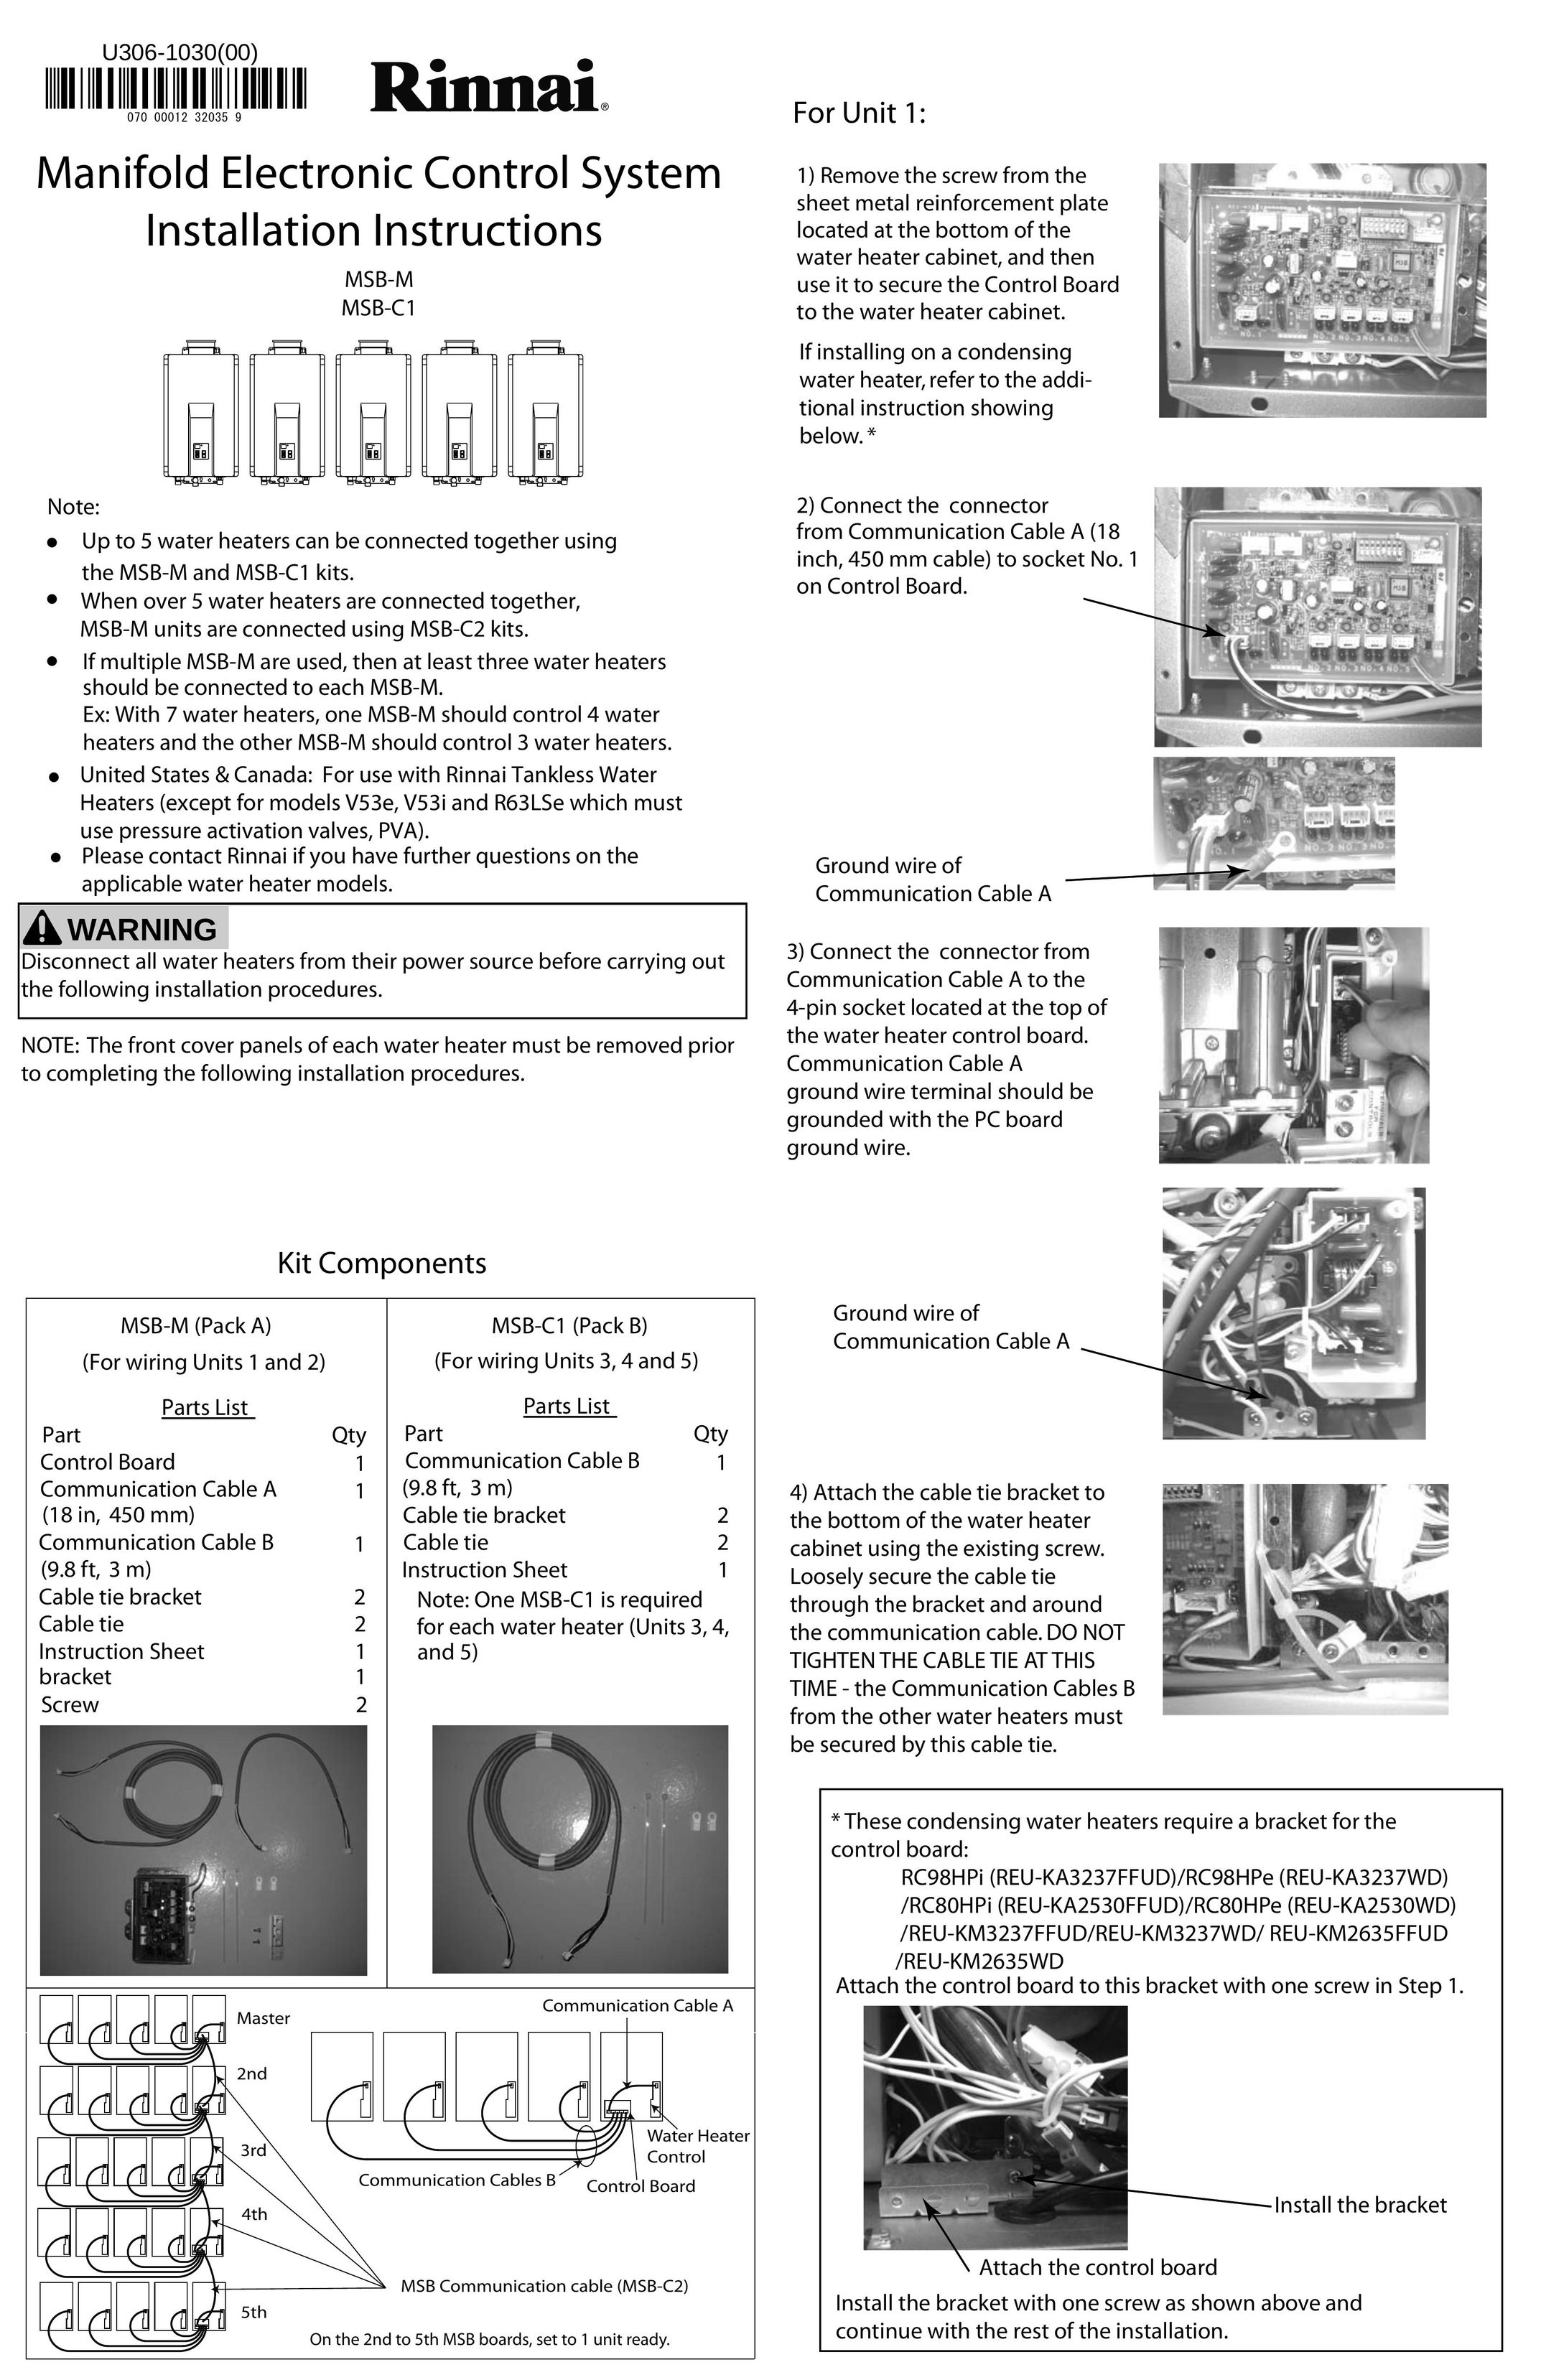 Rinnai MSB-C1 Water Heater User Manual